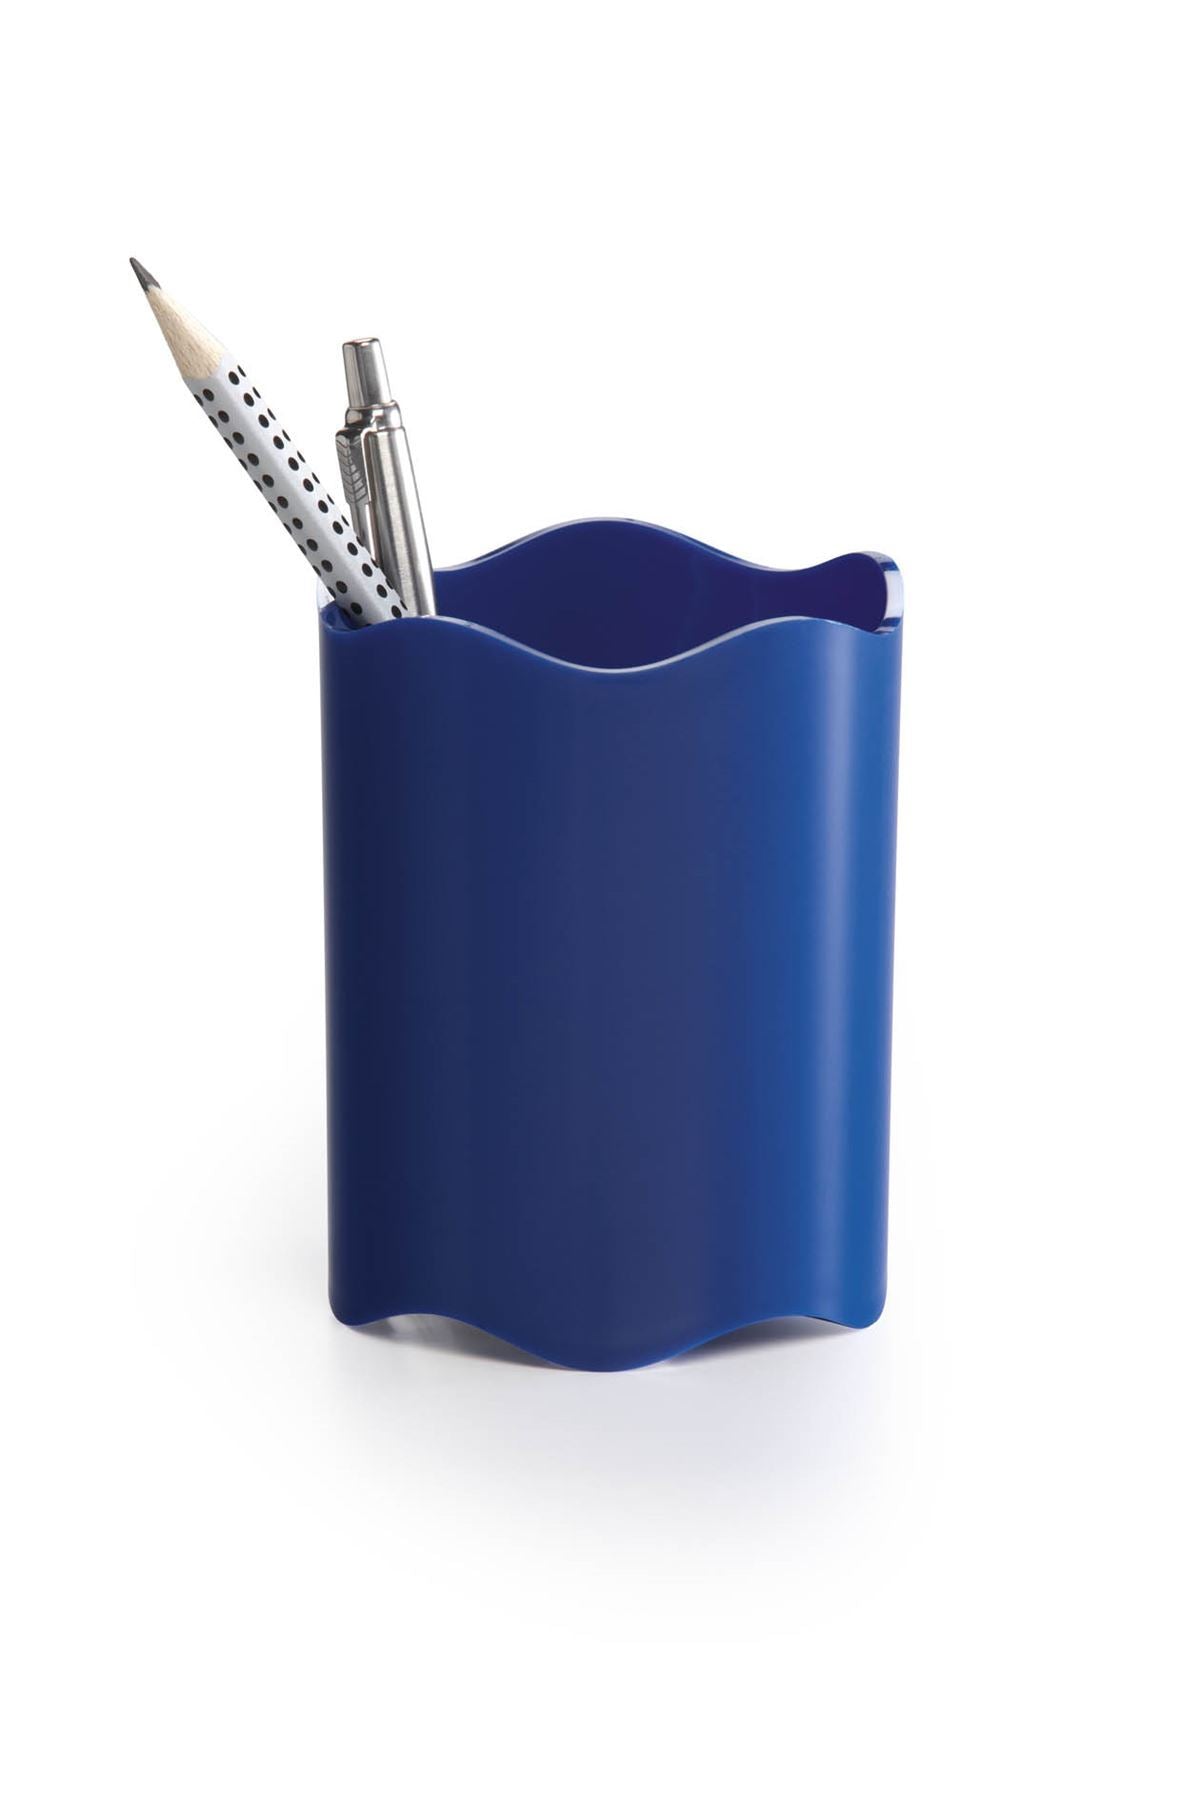 Durable TREND Pen Pot Pencil Holder Desk Tidy Organizer Cup | Blue